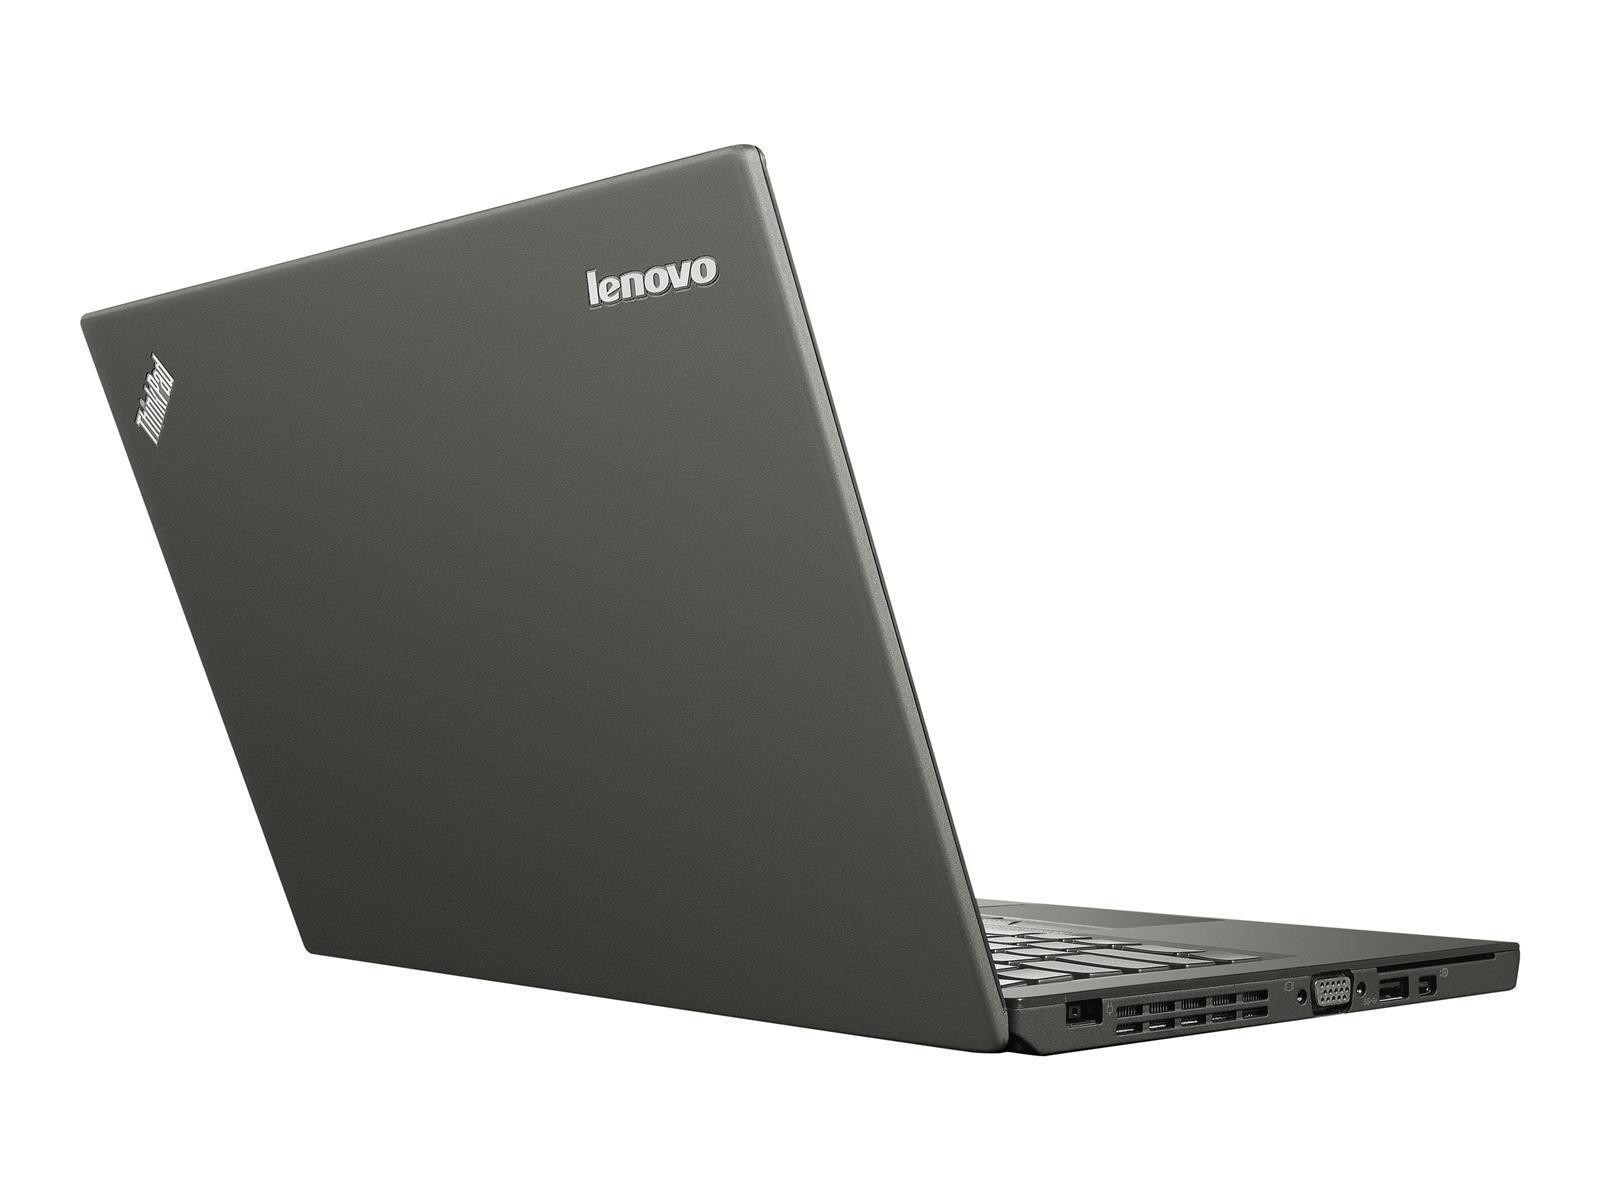 Lenovo ThinkPad X250 Laptop Intel Core i5-5300U 8GB RAM 128GB SSD Win 10 Pro AZERTY